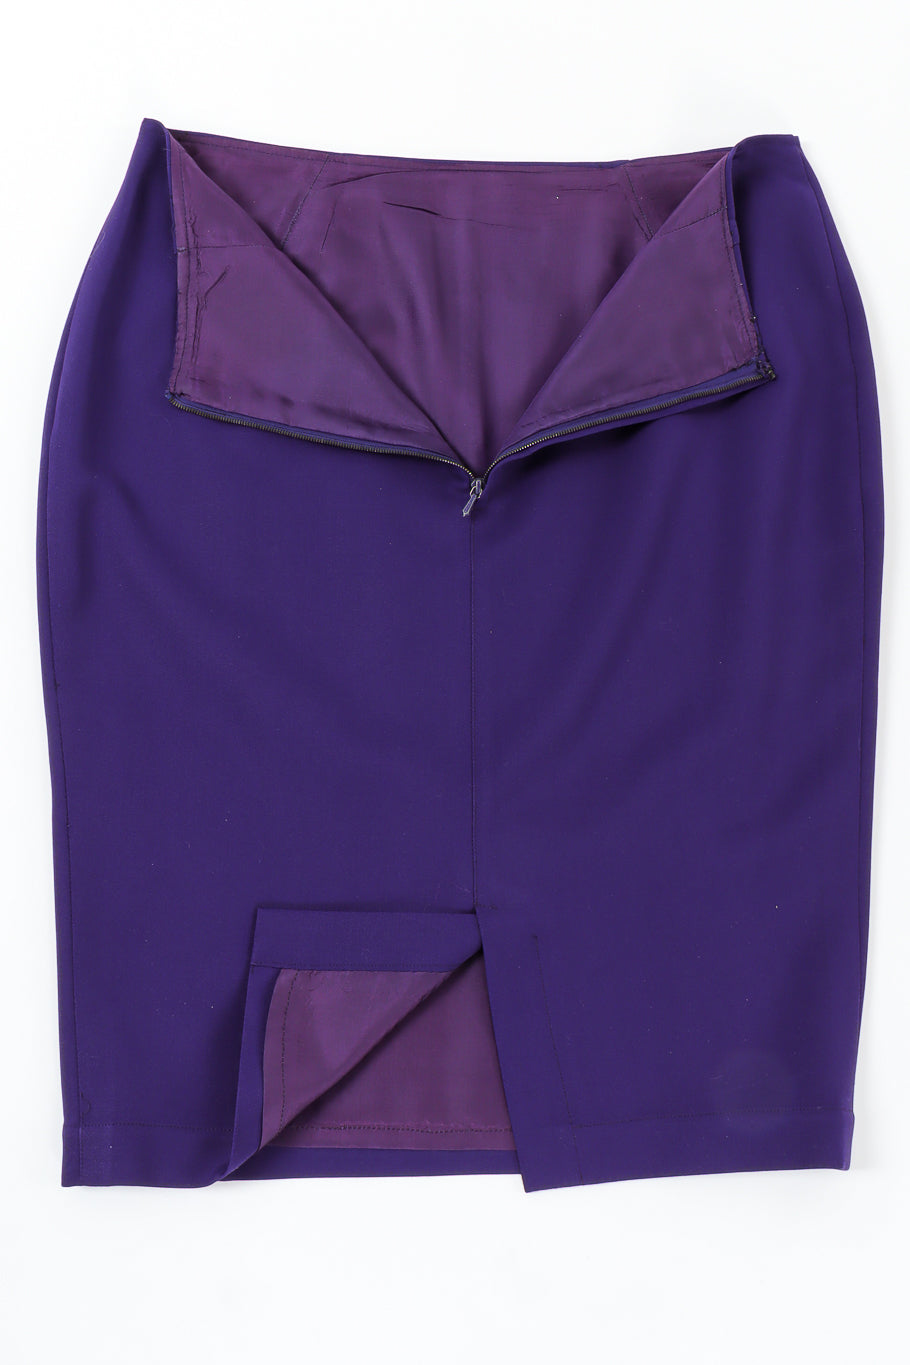 Vintage Thierry Mugler Buckle Jacket & Skirt Suit Set skirt opening/lining @ Recess LA